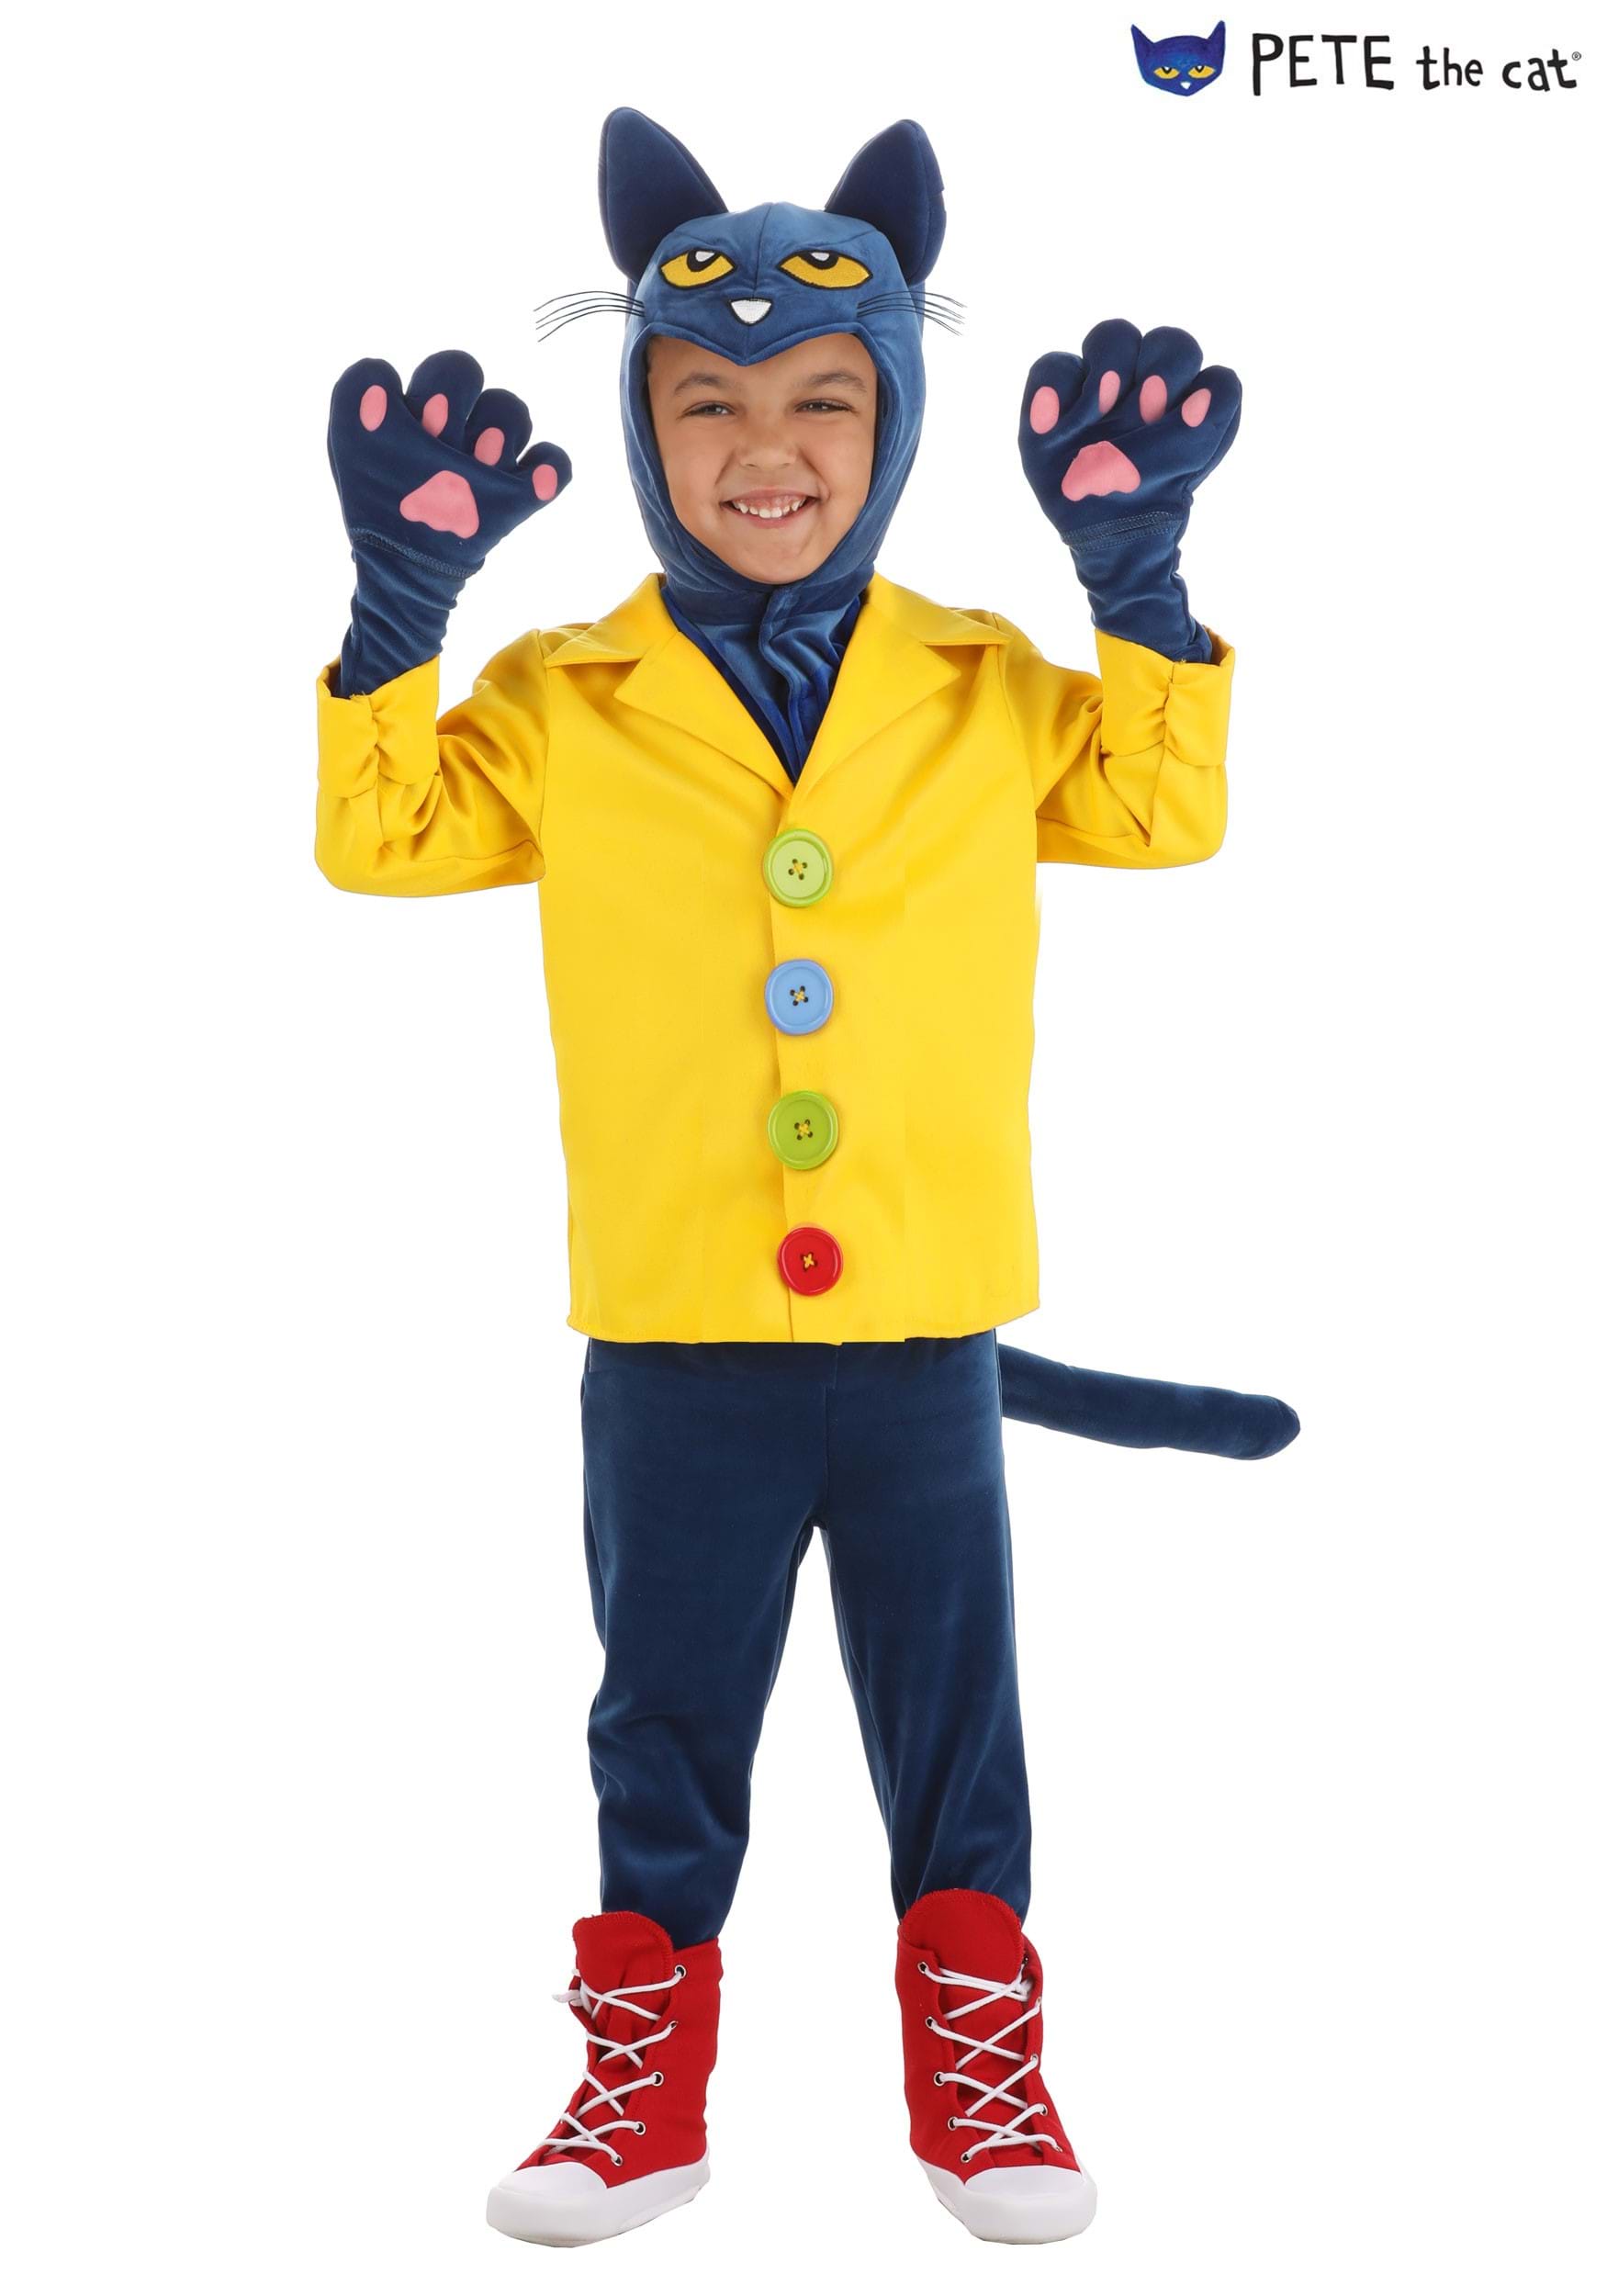 Toddler Pete the Cat Costume